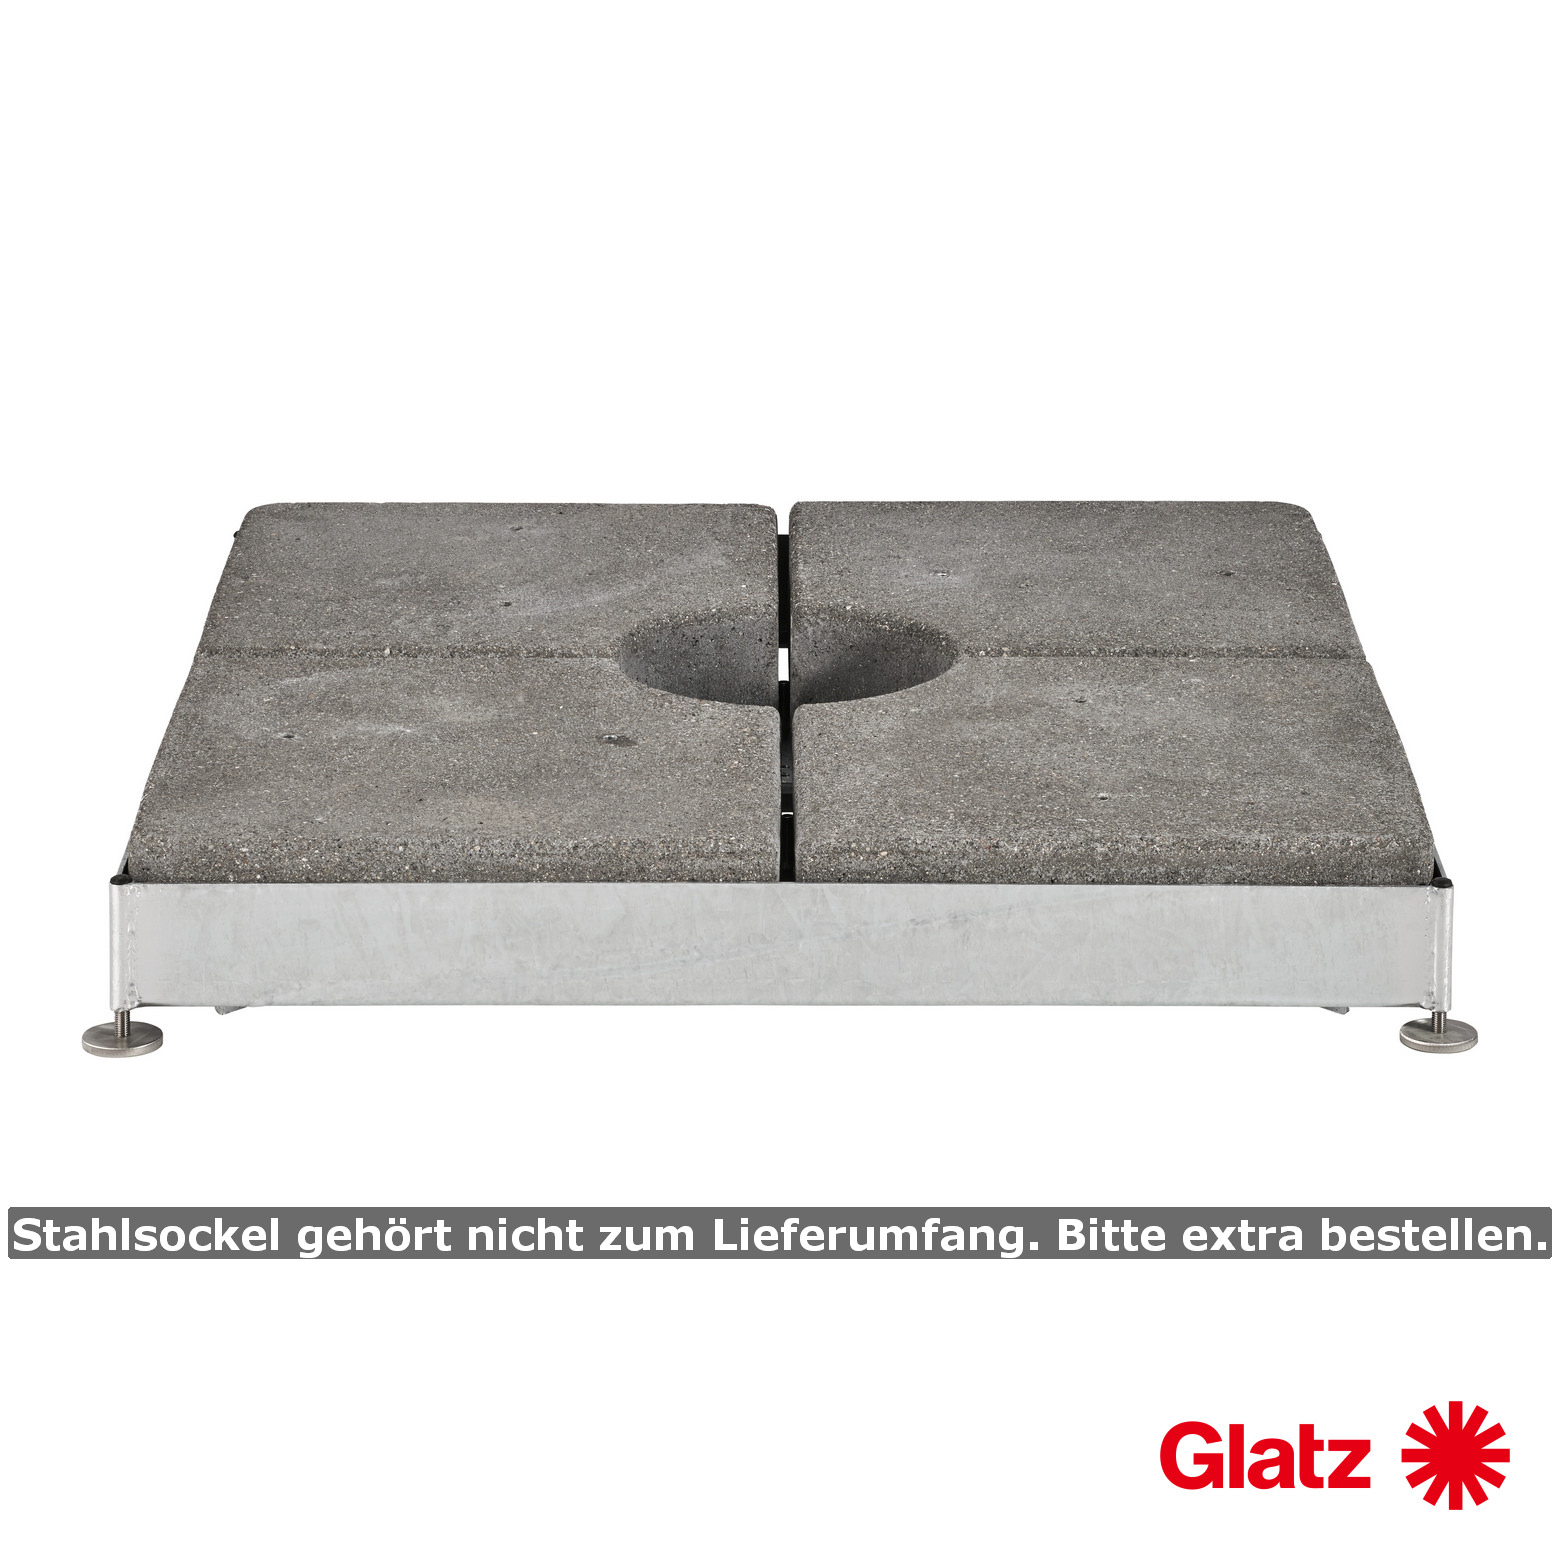 Glatz Betonelement-Set, 4x65 kg, für 310 kg Sockel, 48.3x48.3x12.6 cm